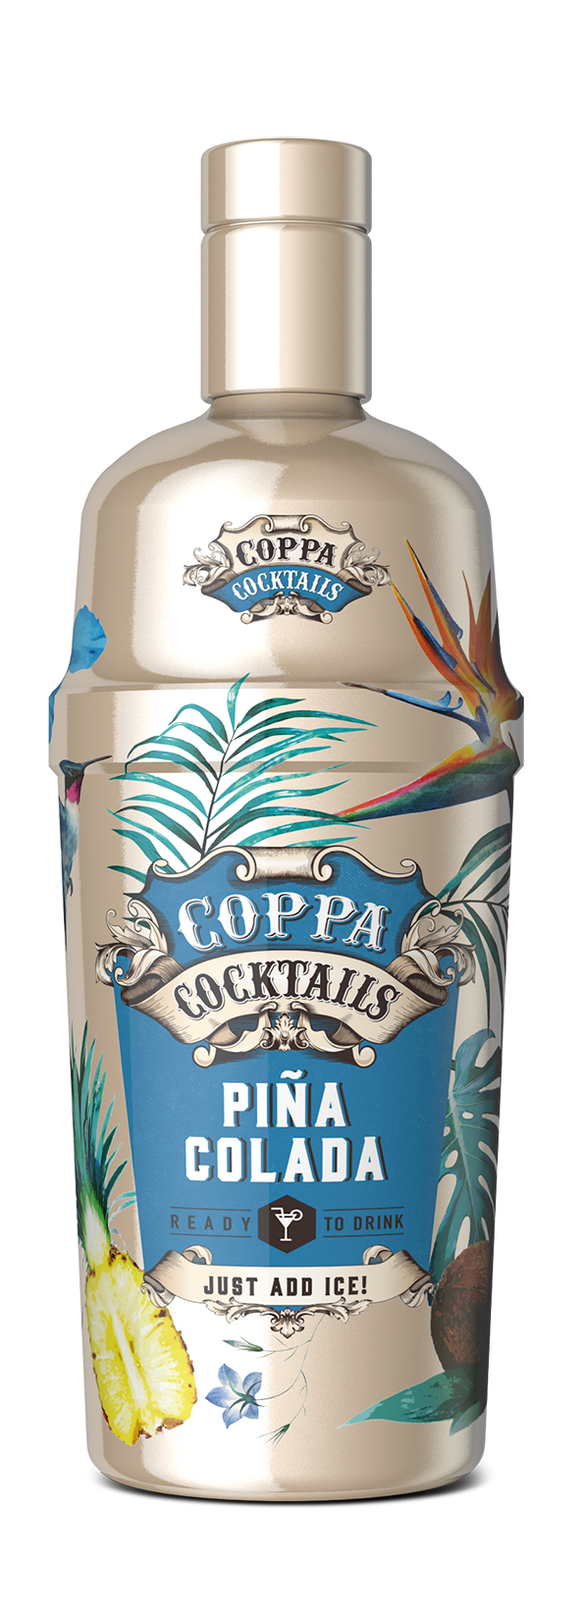 COPPA COCKTAILS PINA COLADA 750 ML